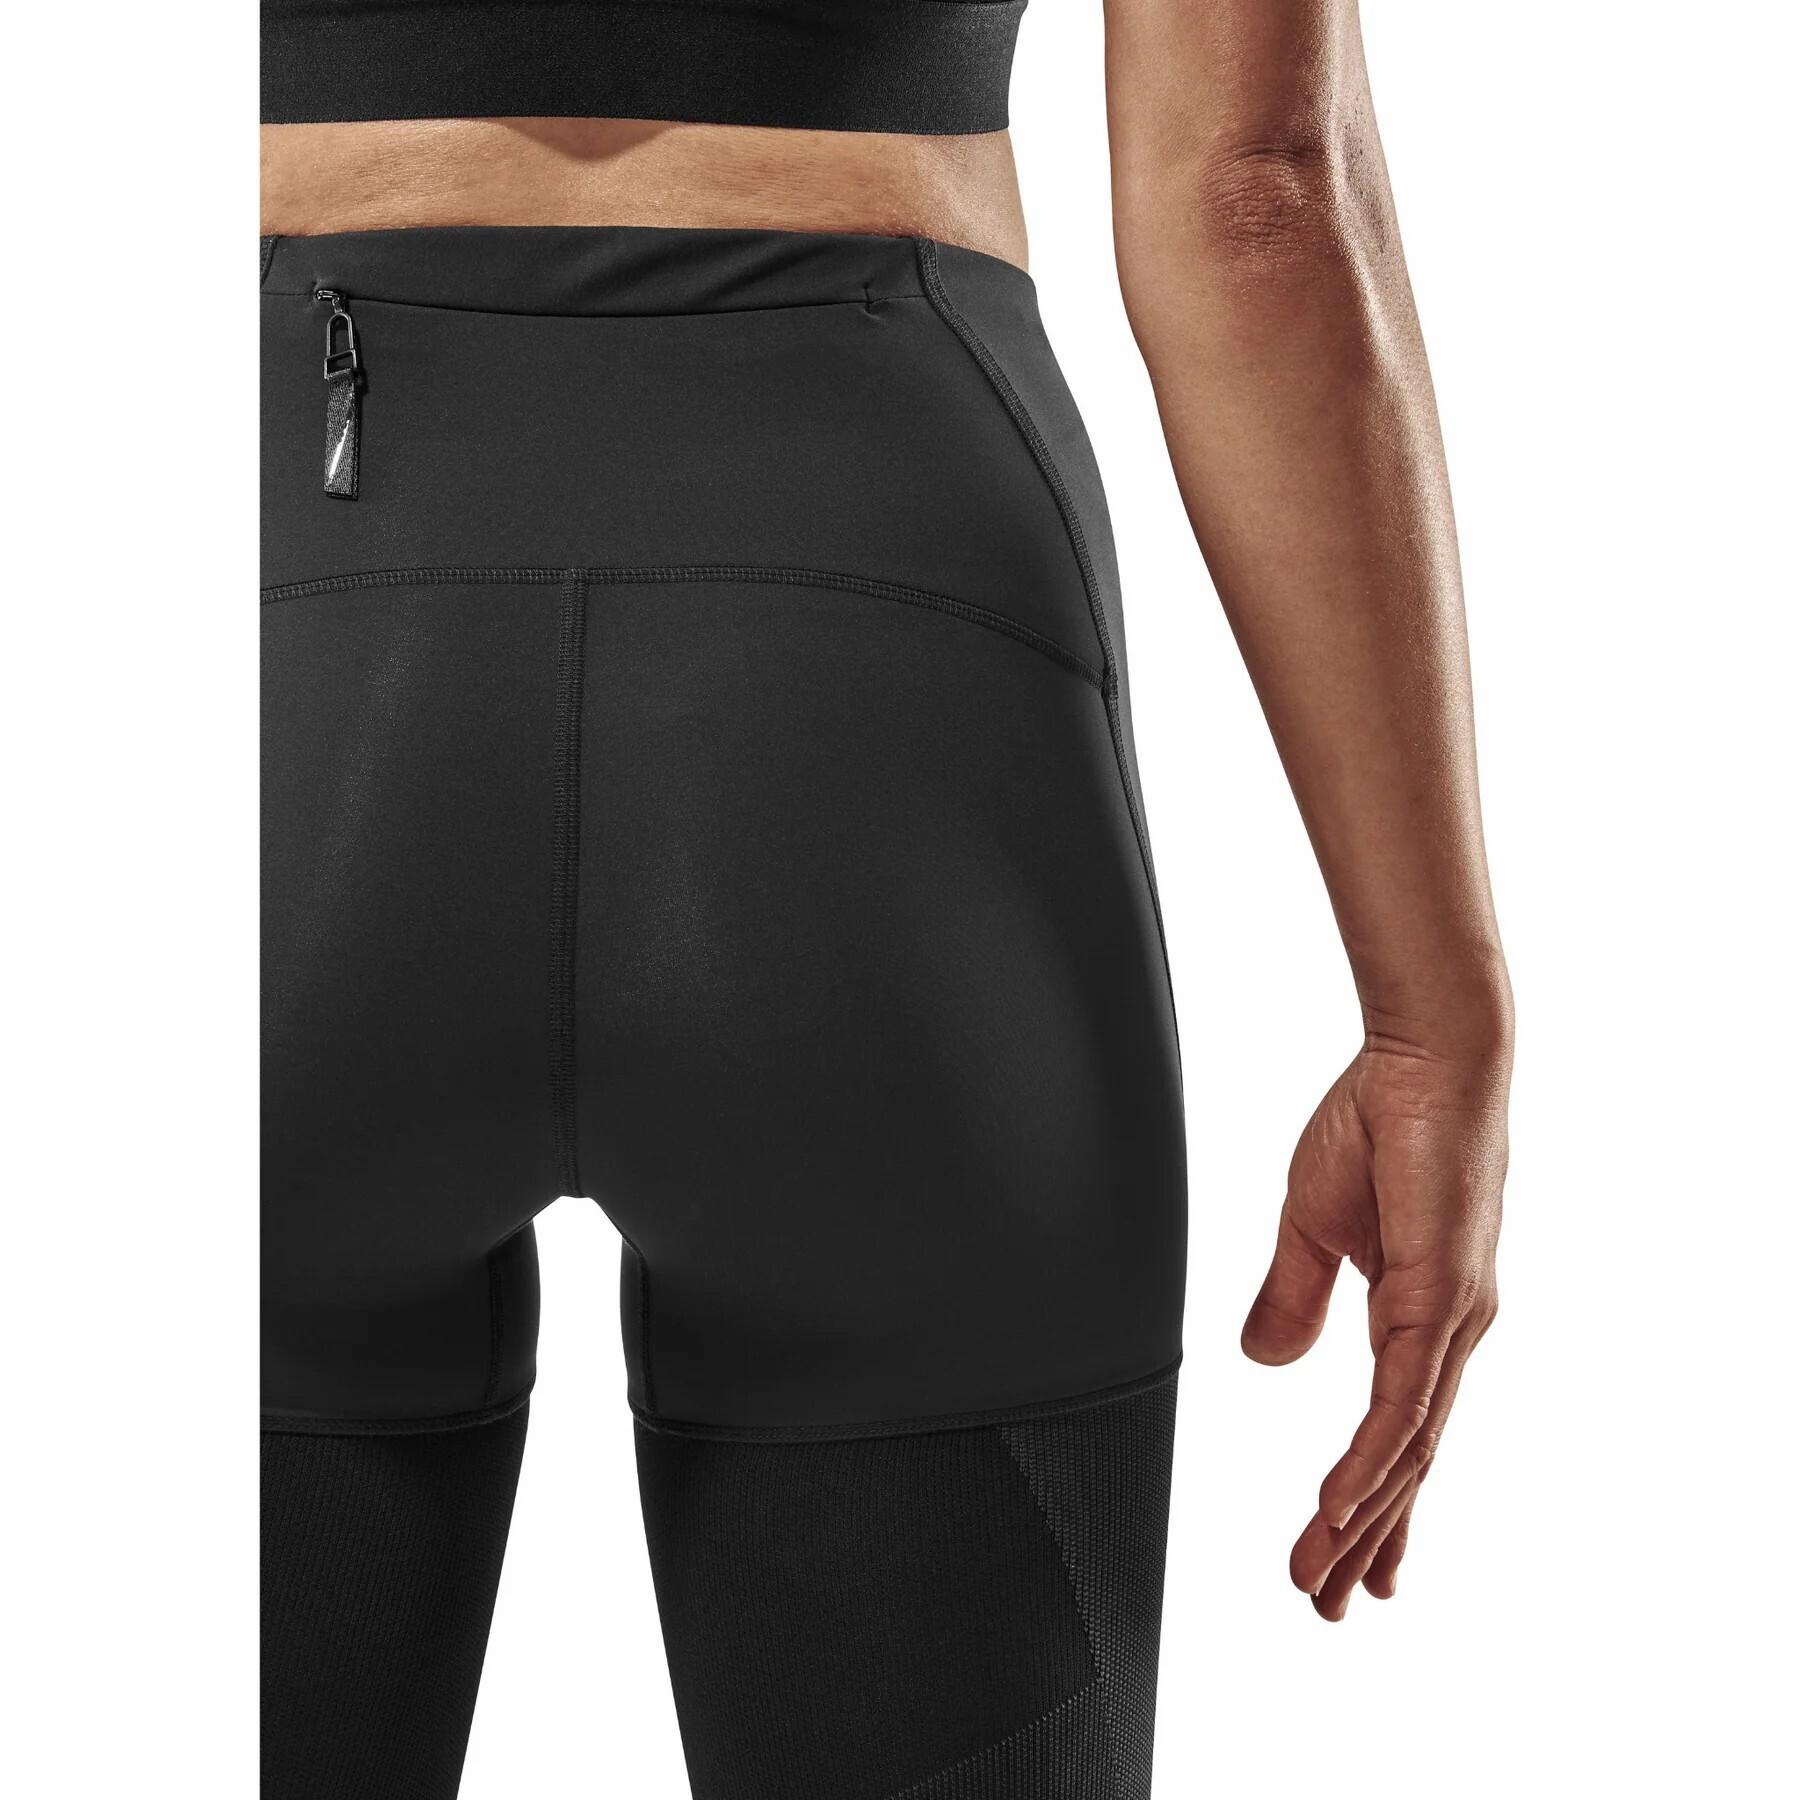 Women's leggings CEP Compression - Teamwear - Soccer